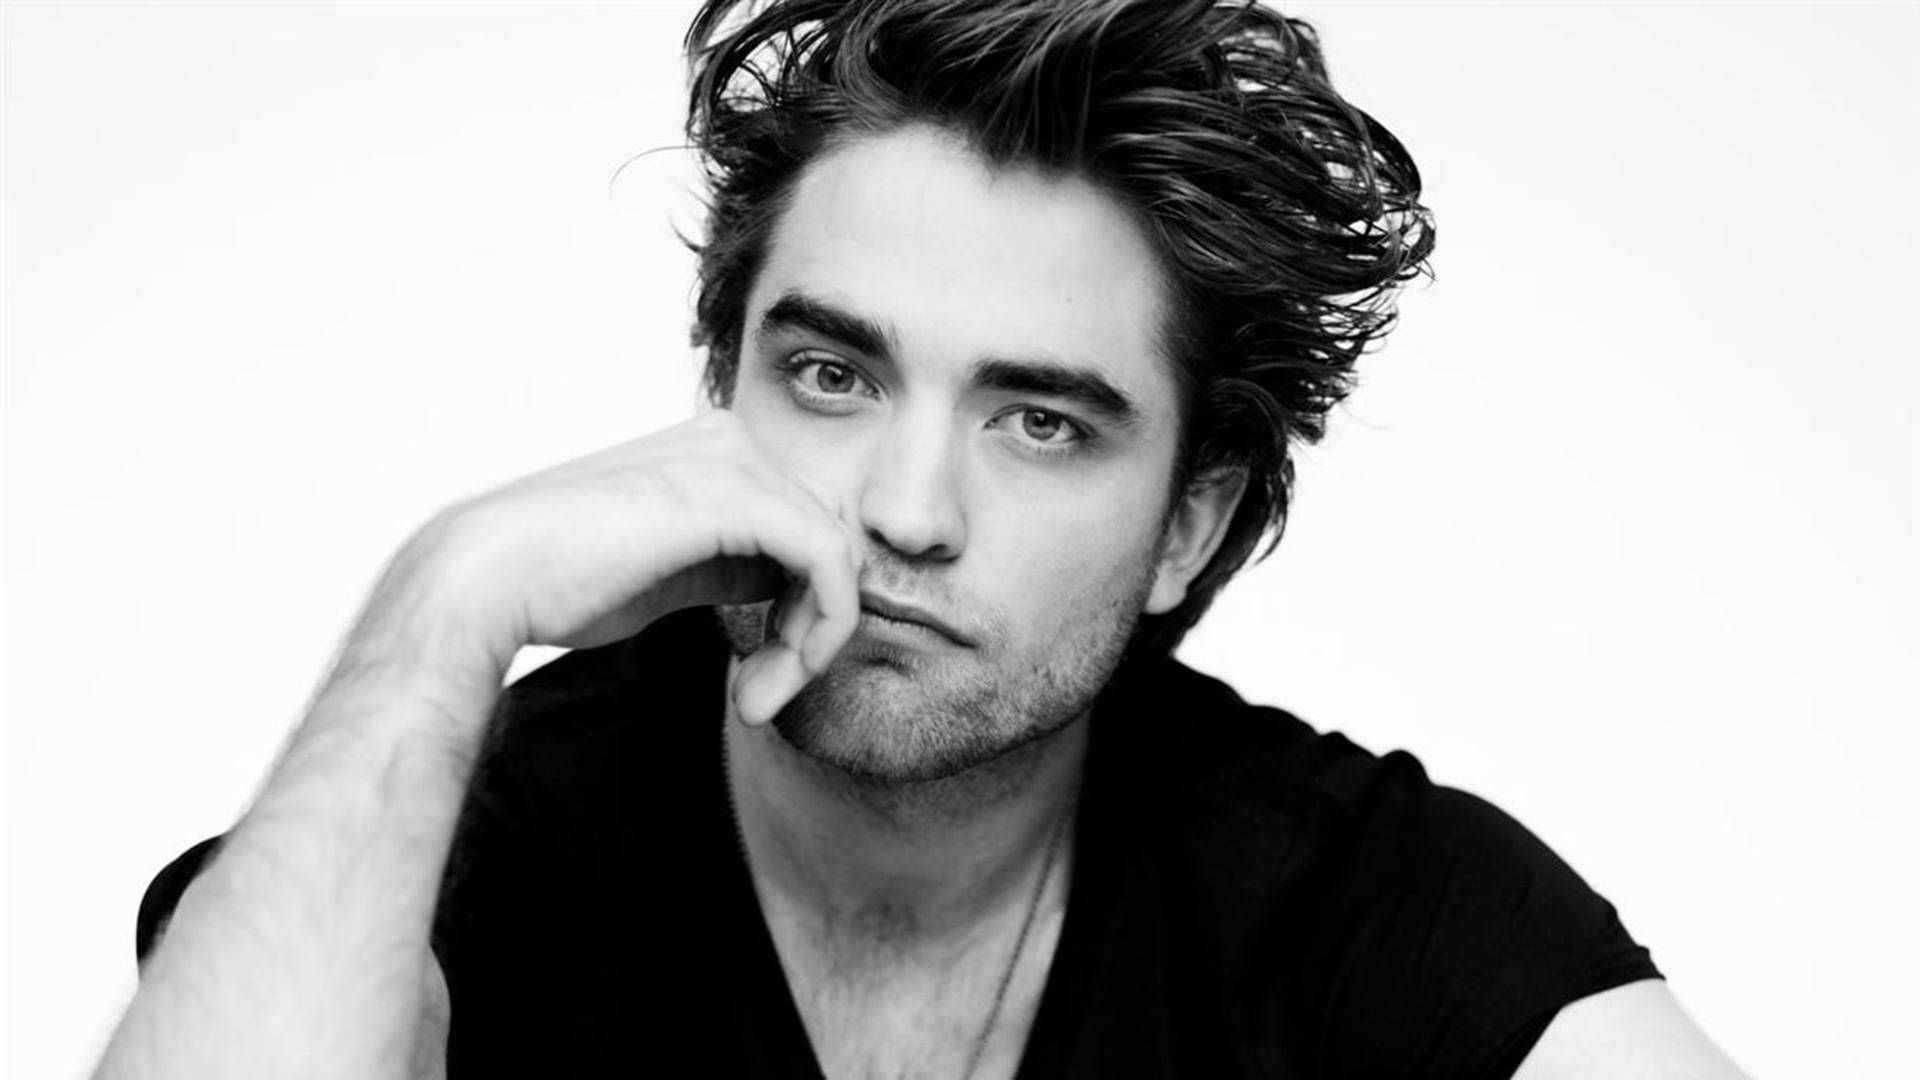 Robert Pattinson Wallpaper Images